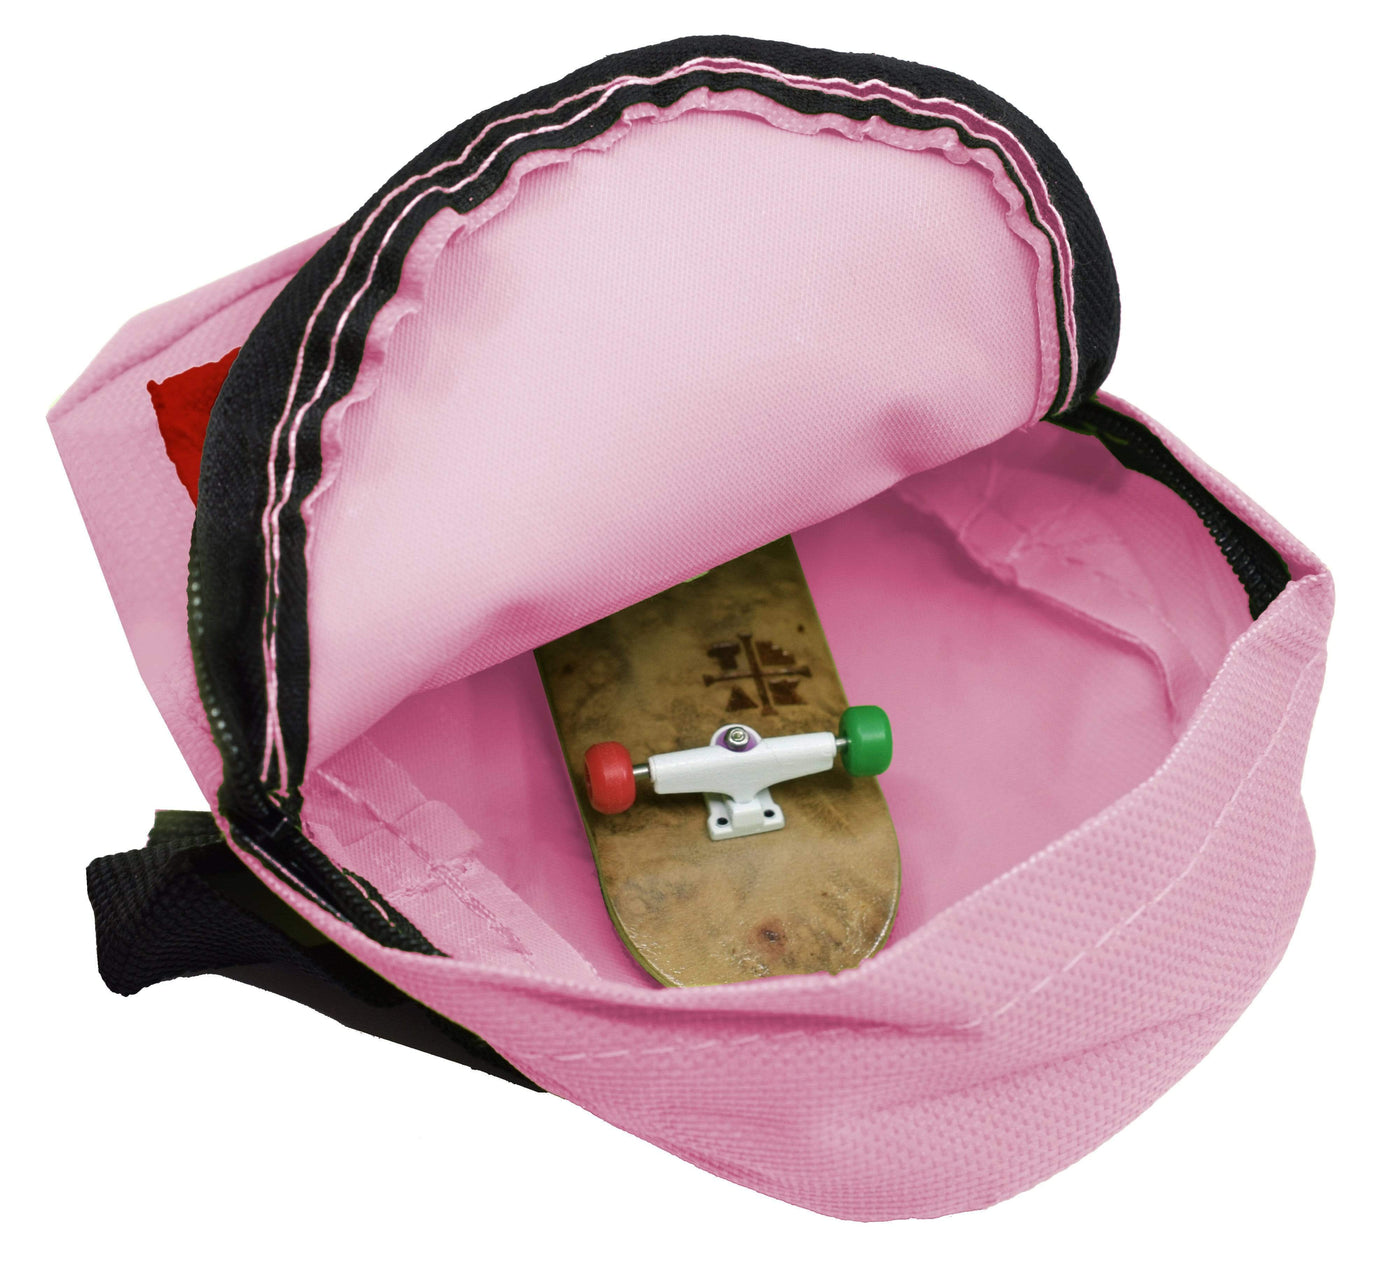 Teak Tuning Mini Fingerboard Travel Backpack Case - Pink Pink